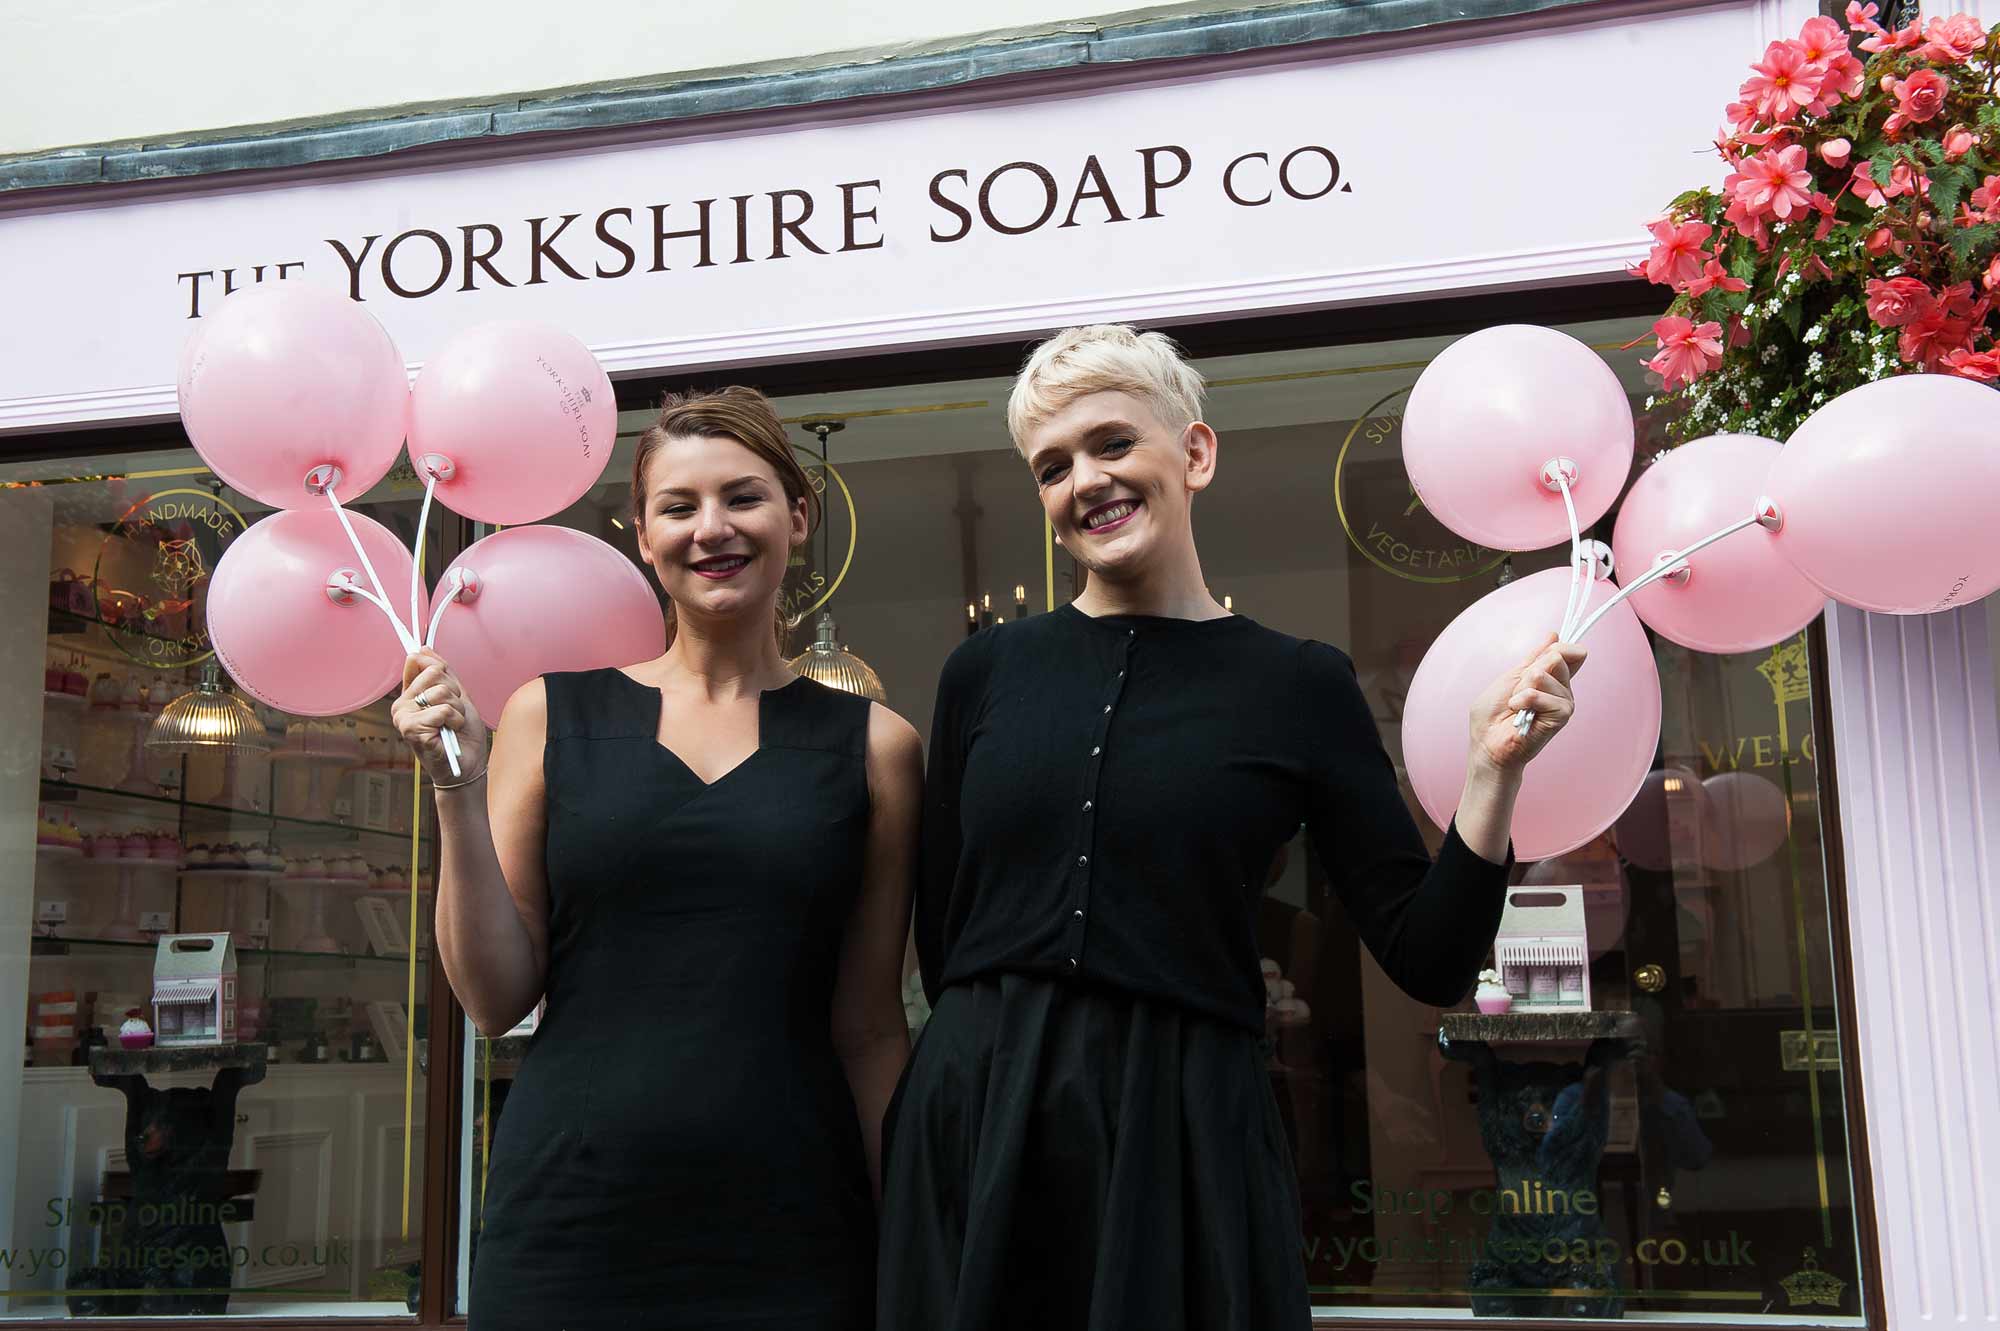 The Yorkshire Soap Company in Knaresborough